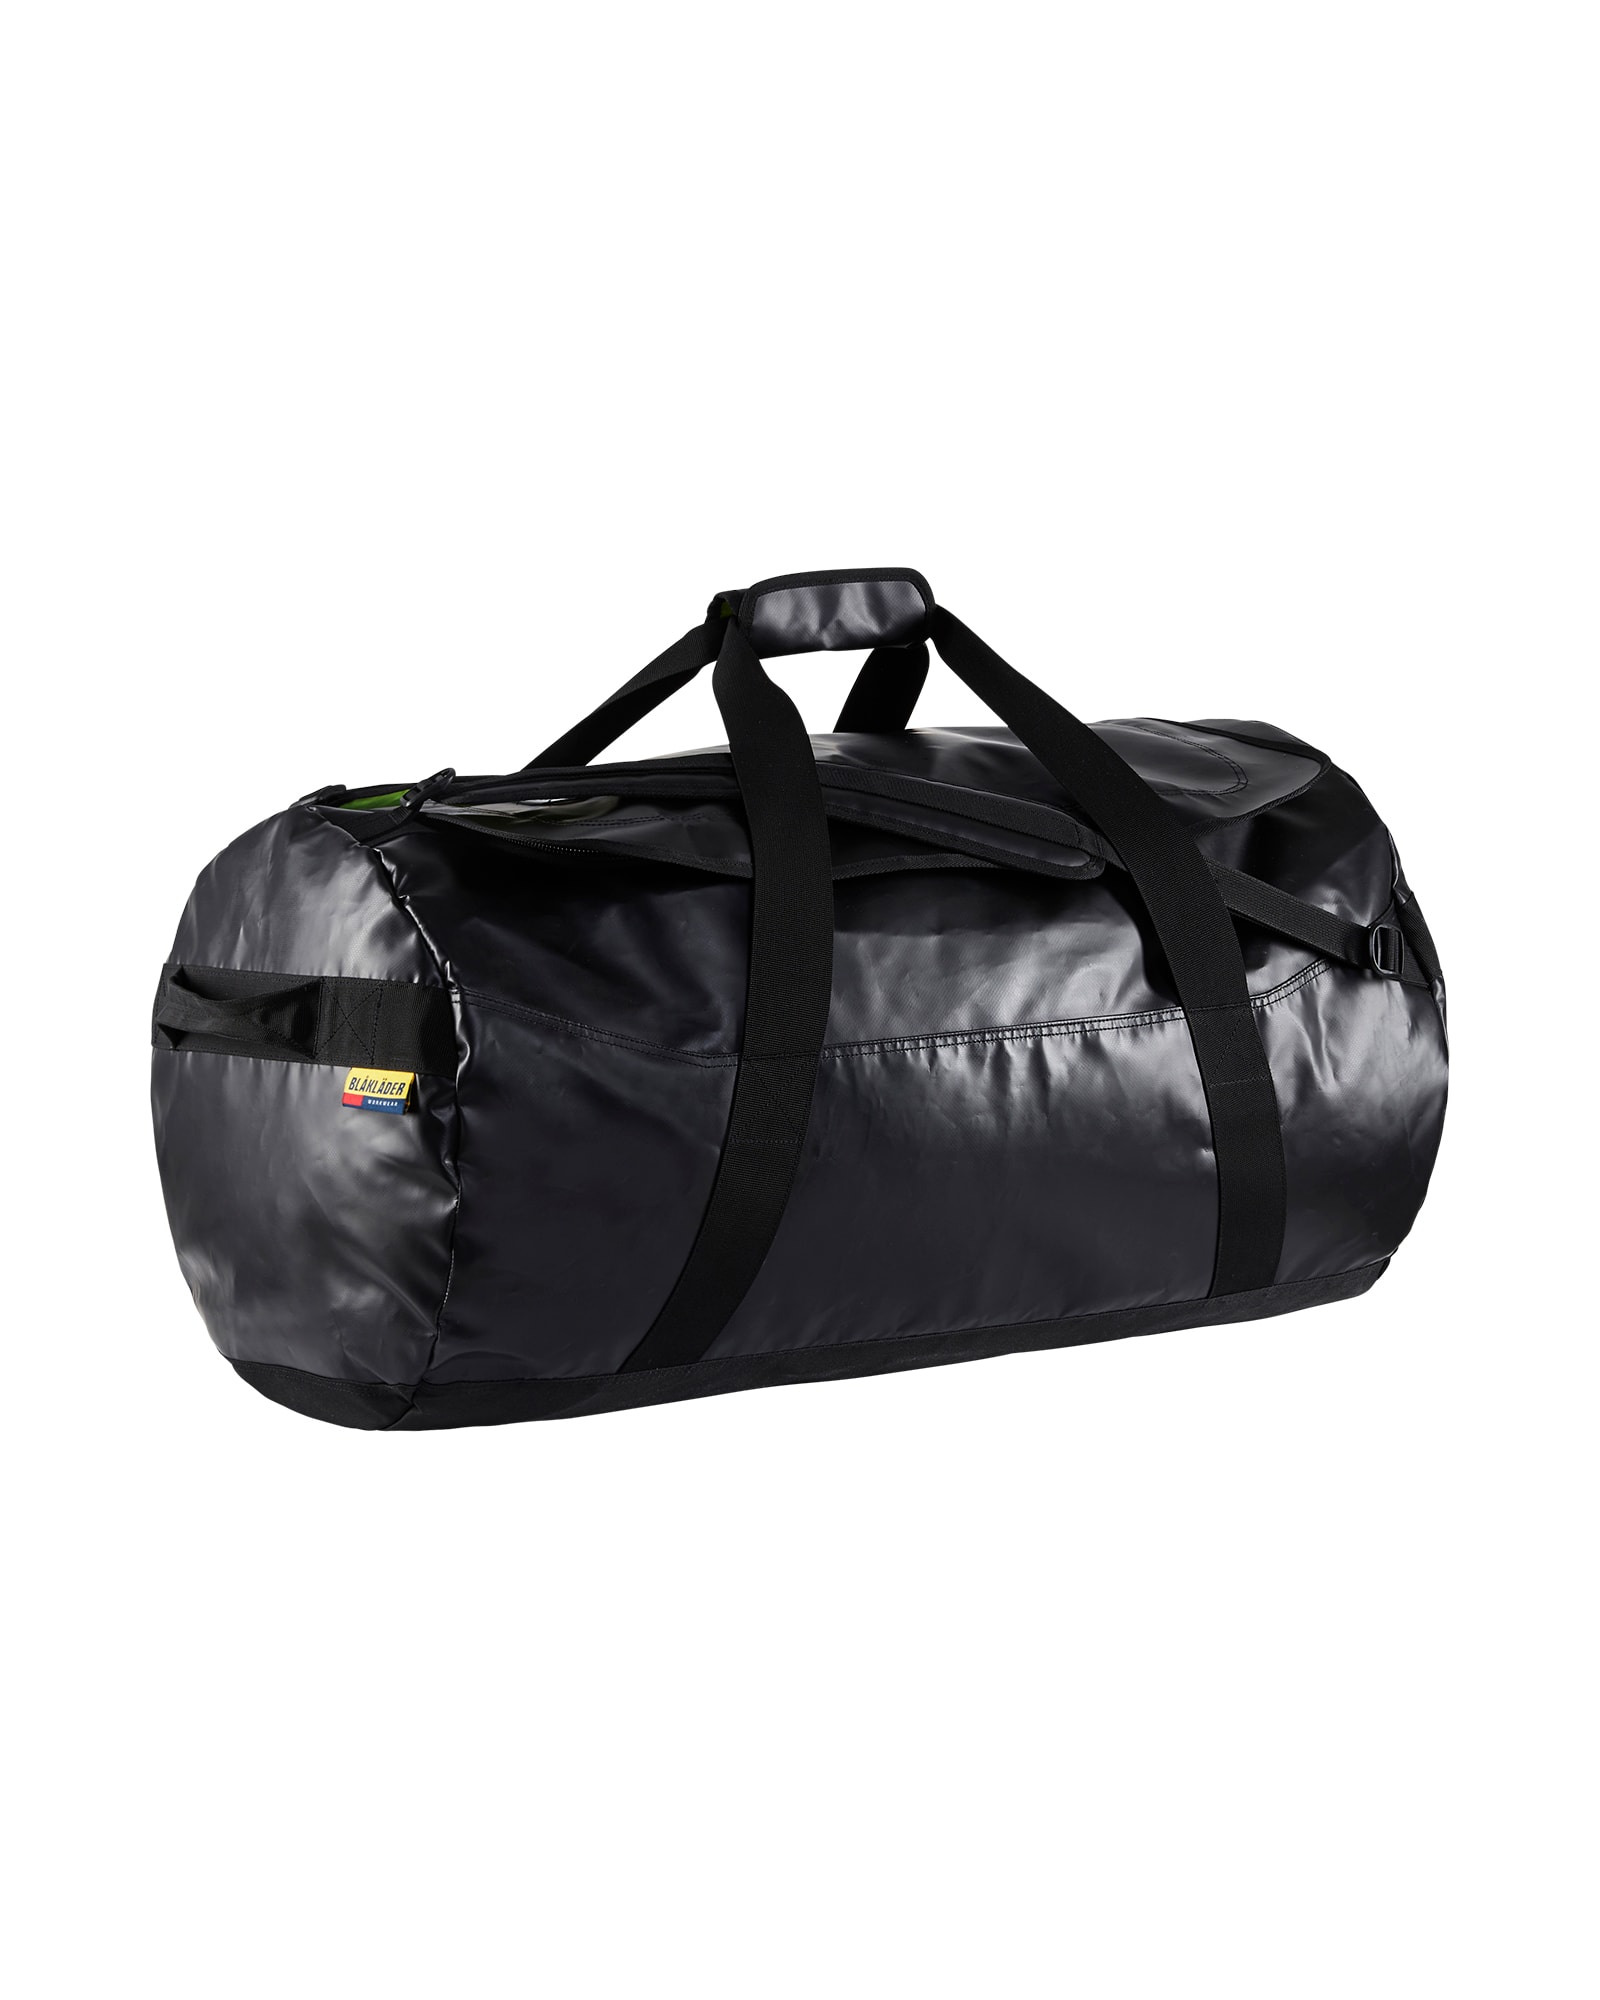 Forenkle afkom pumpe Duffel Bag med logo - iKon - vi styrker dit brand